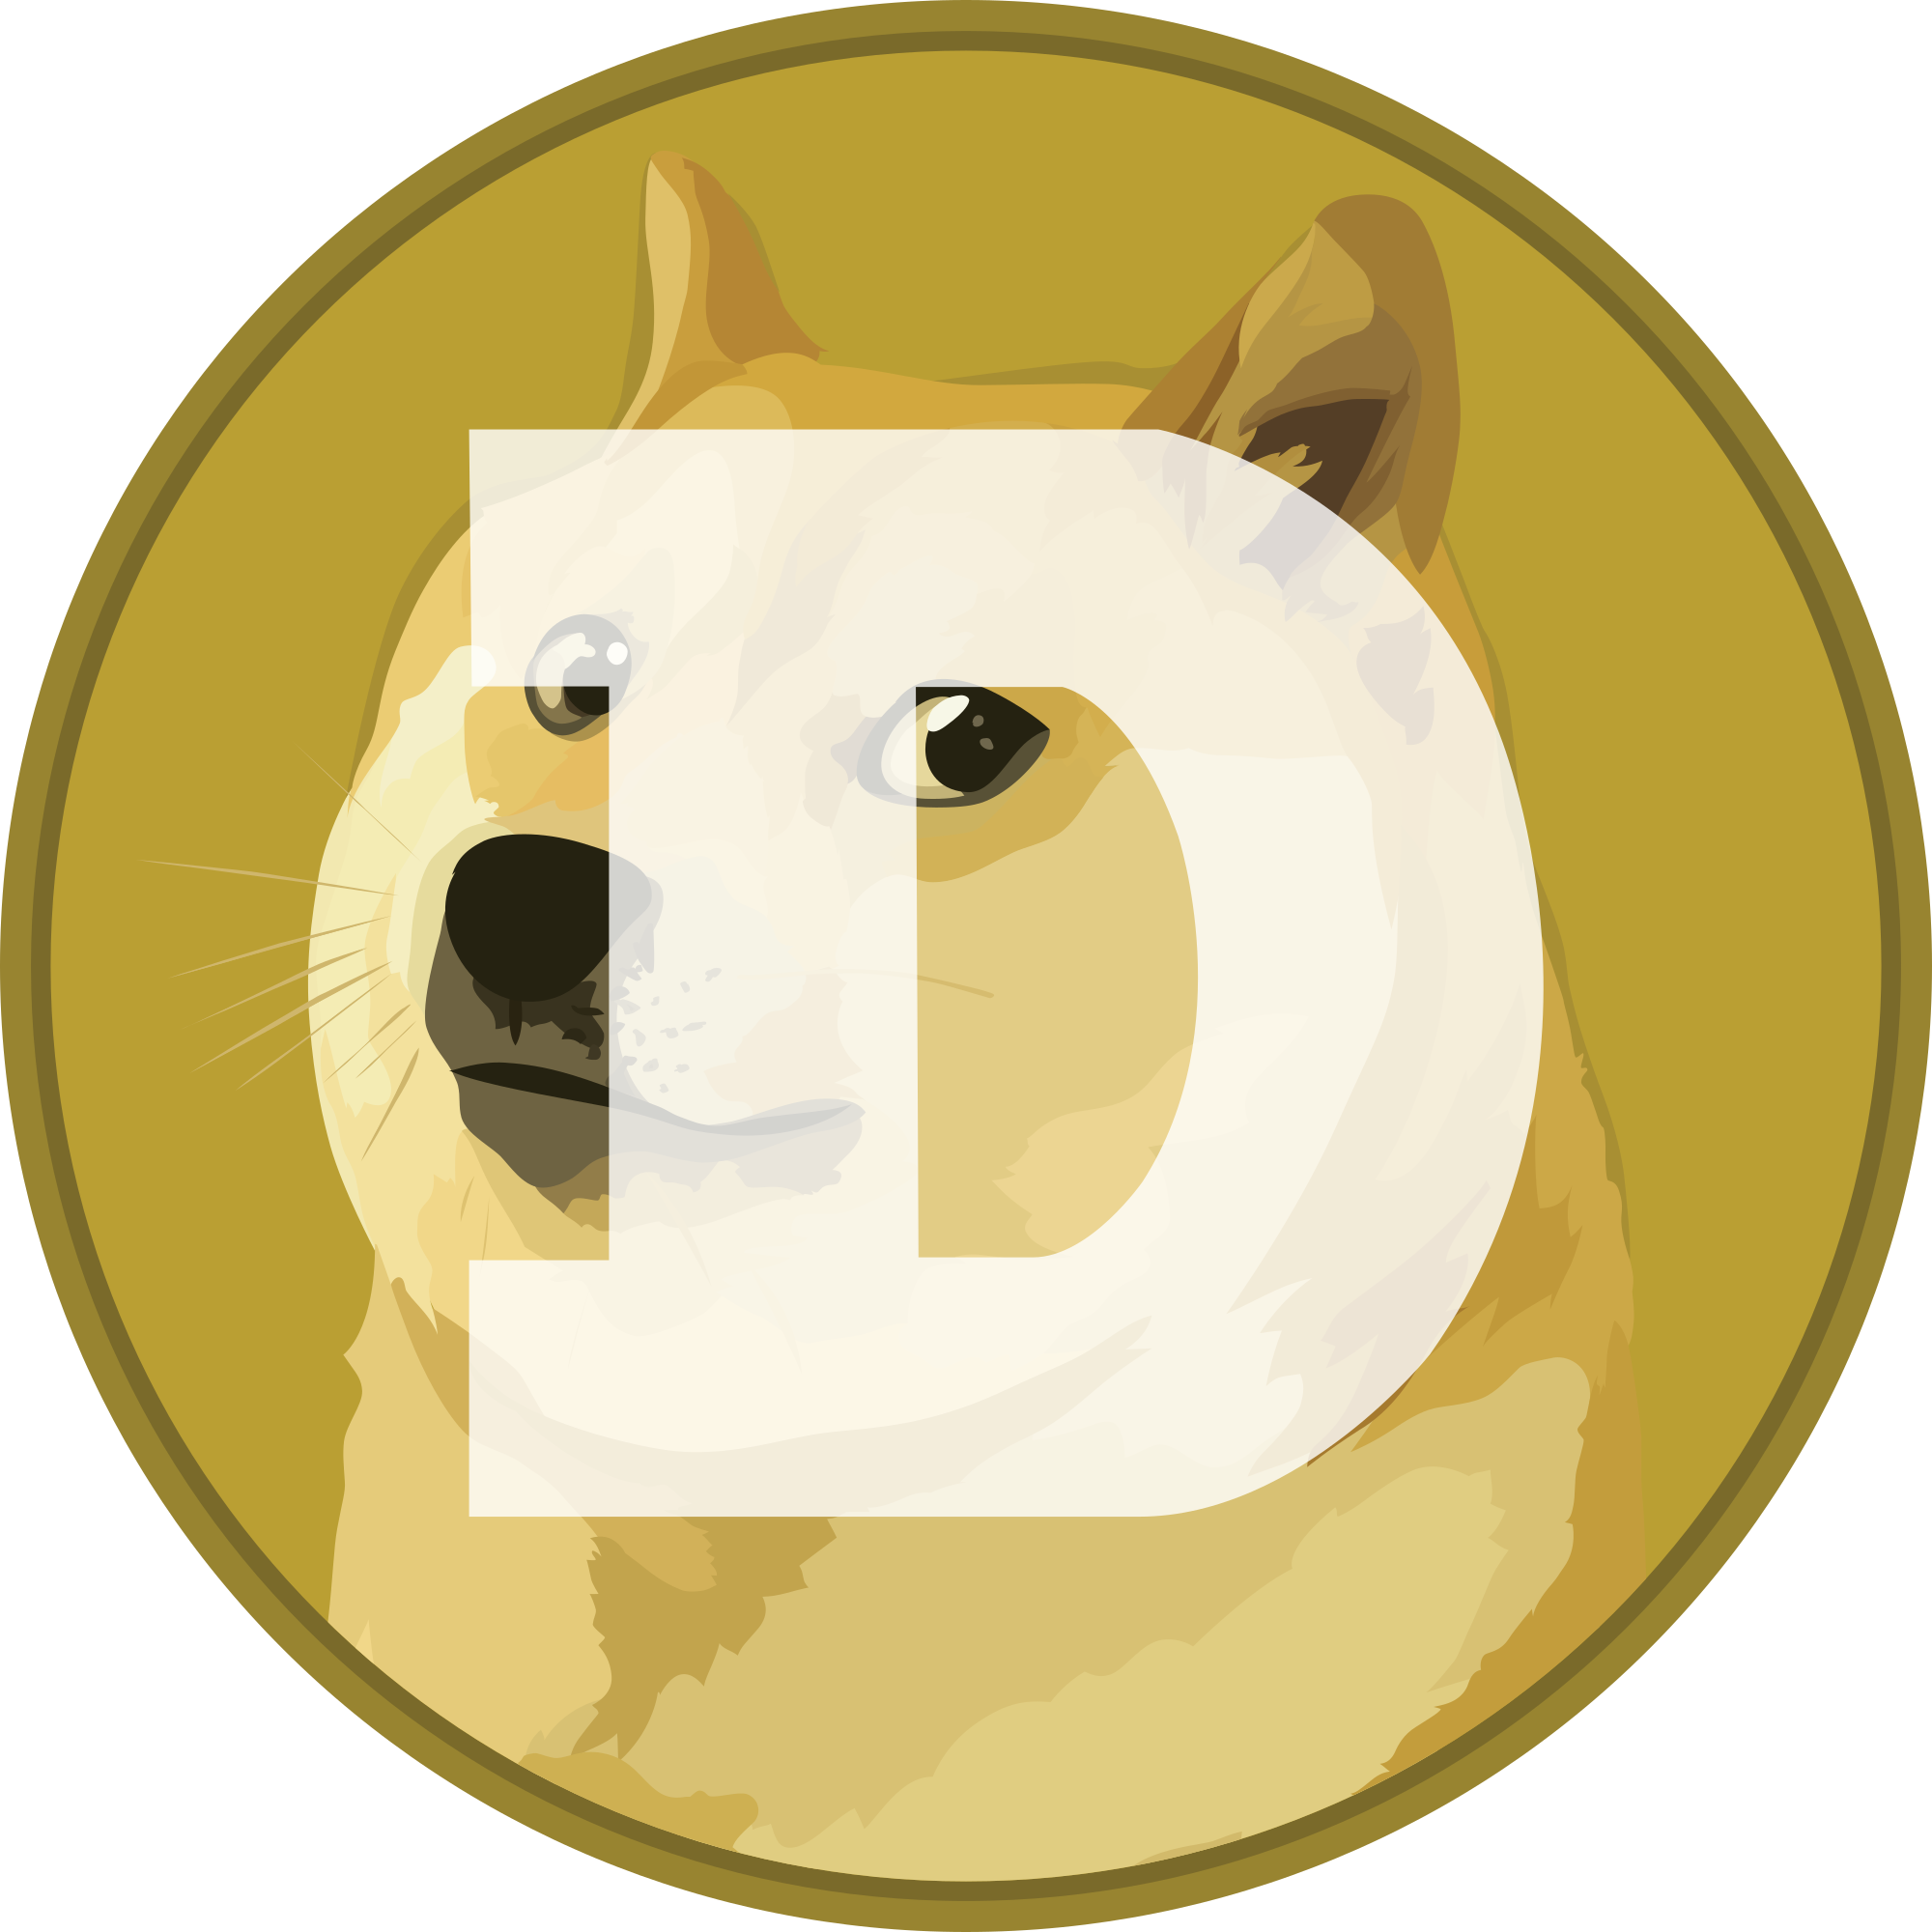 A Dogecoin (DOGE) 